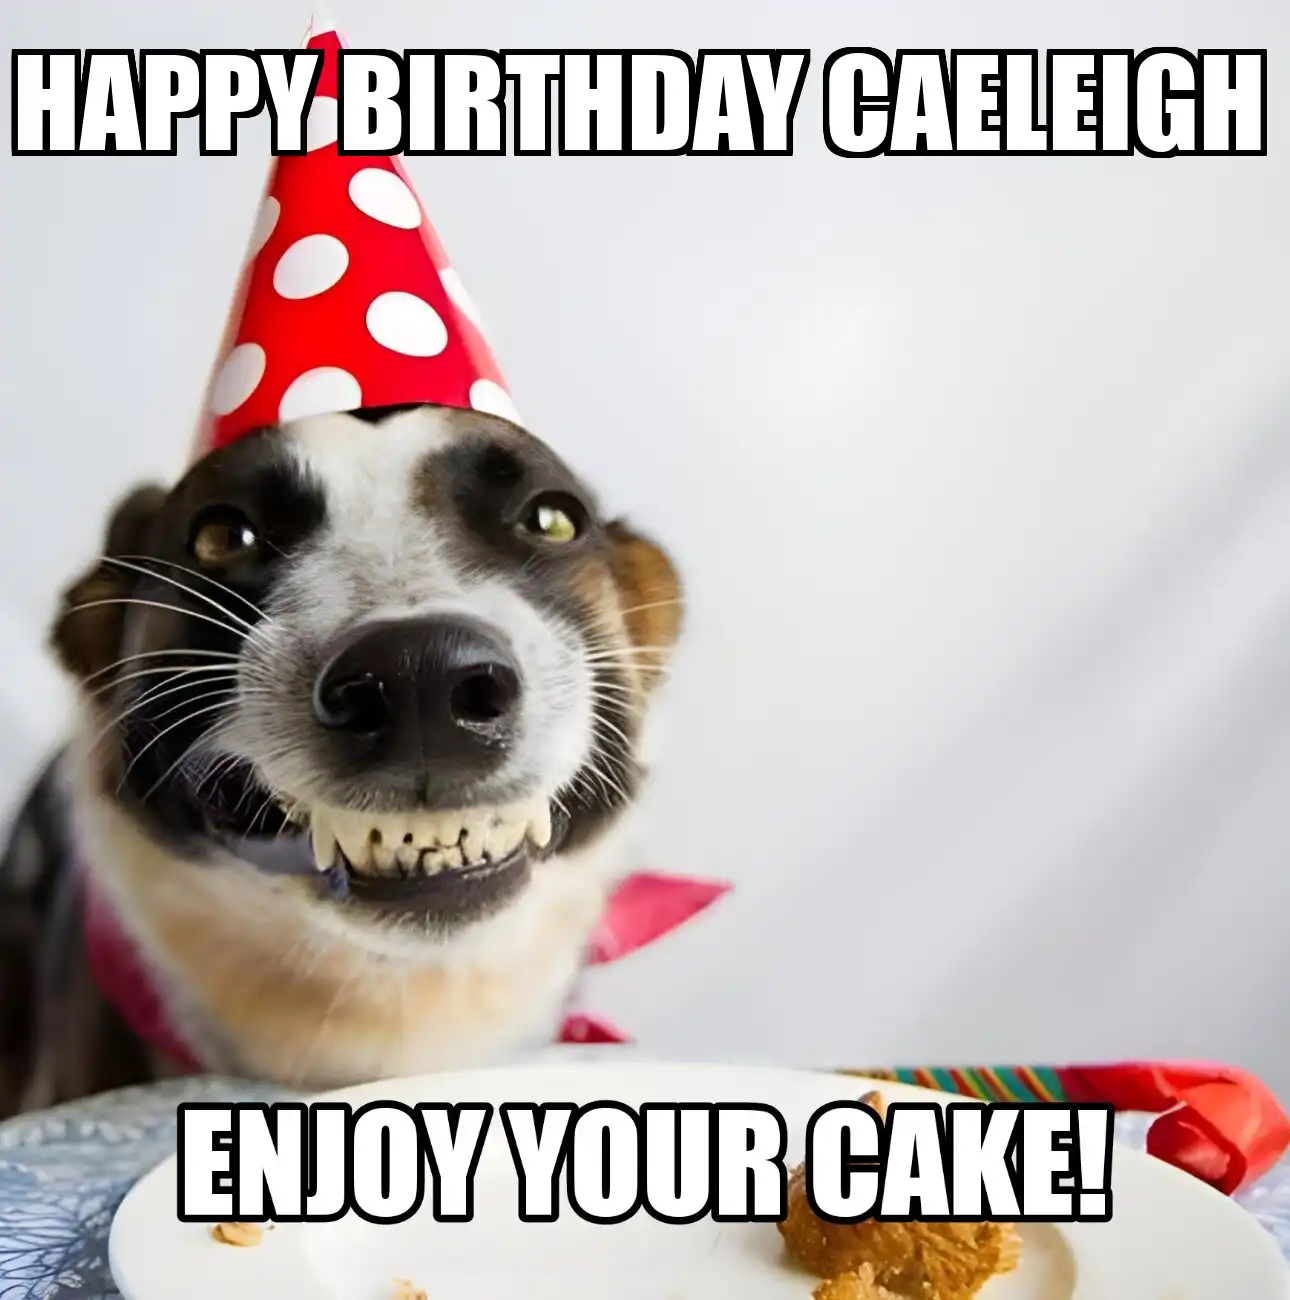 Happy Birthday Caeleigh Enjoy Your Cake Dog Meme